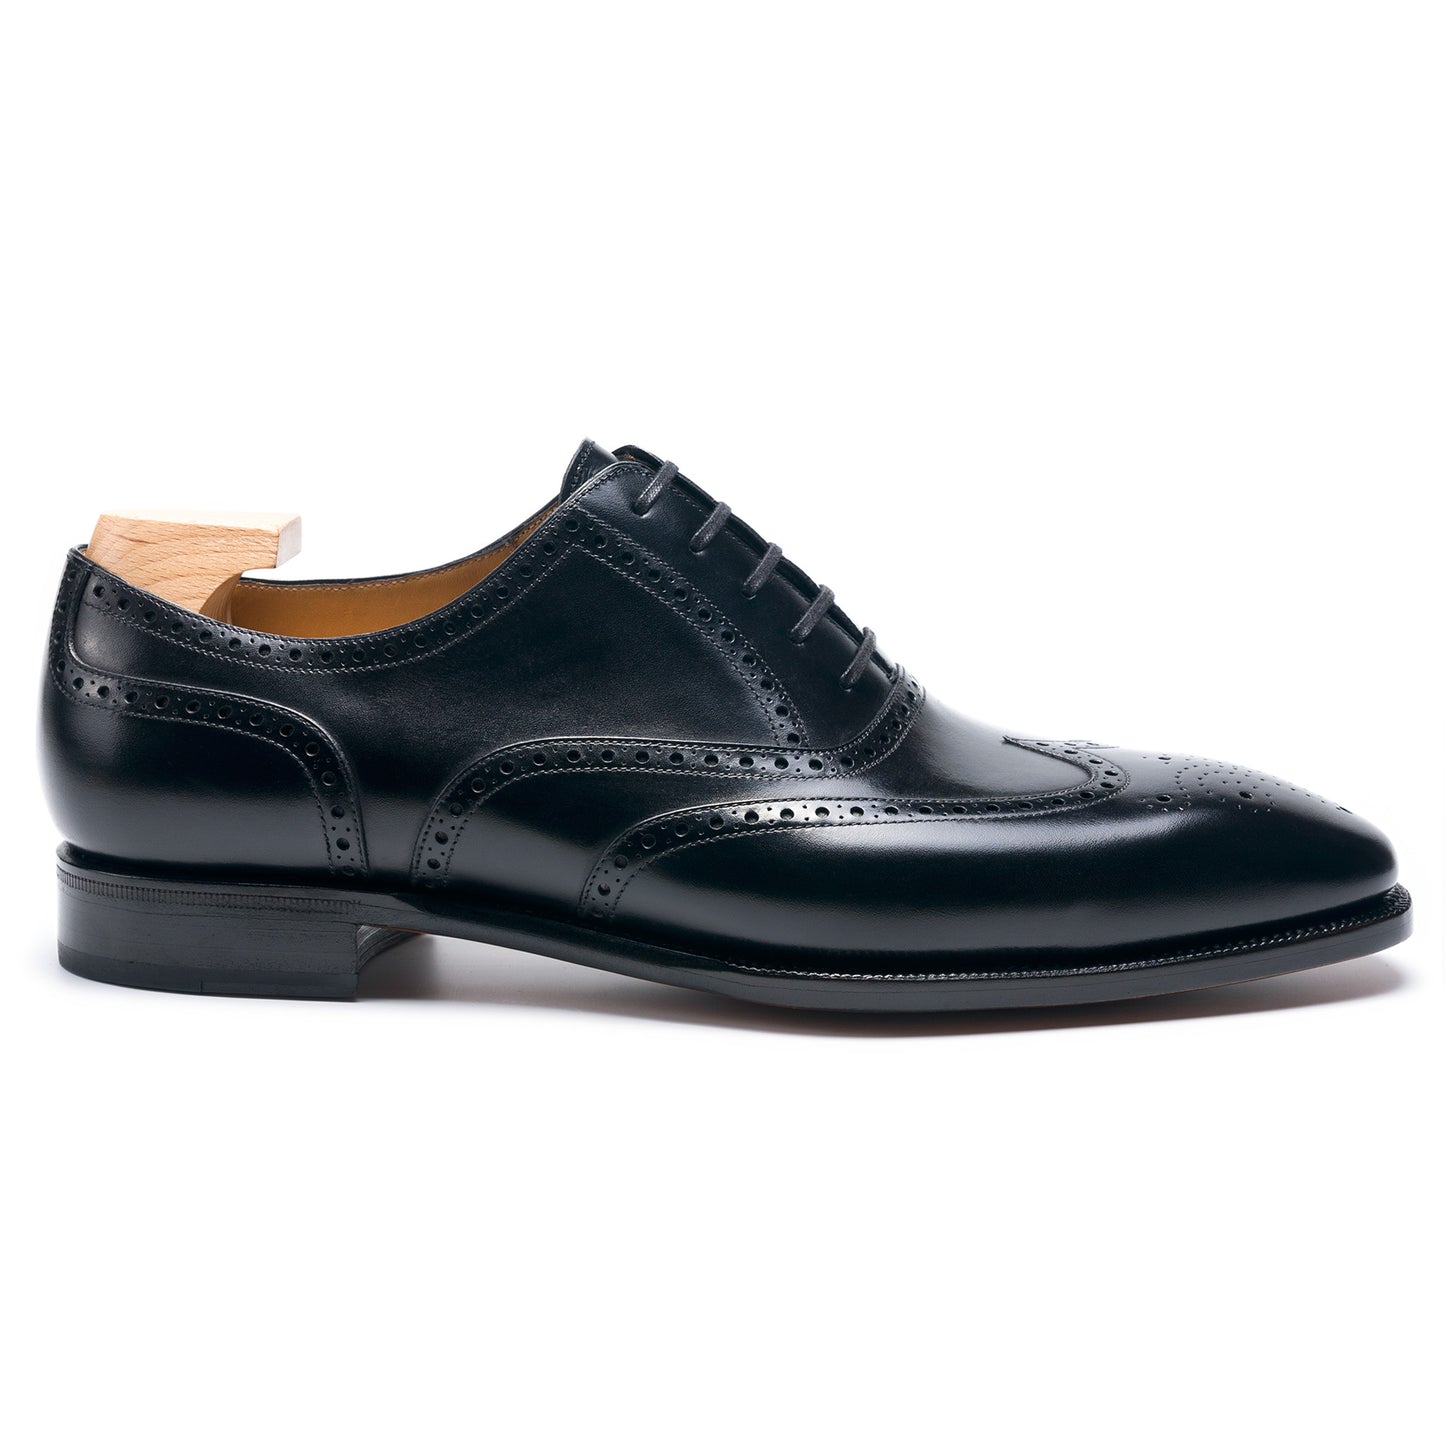 TLB Mallorca leather shoes 207 / VAN GOGH / BOXCALF BLACK